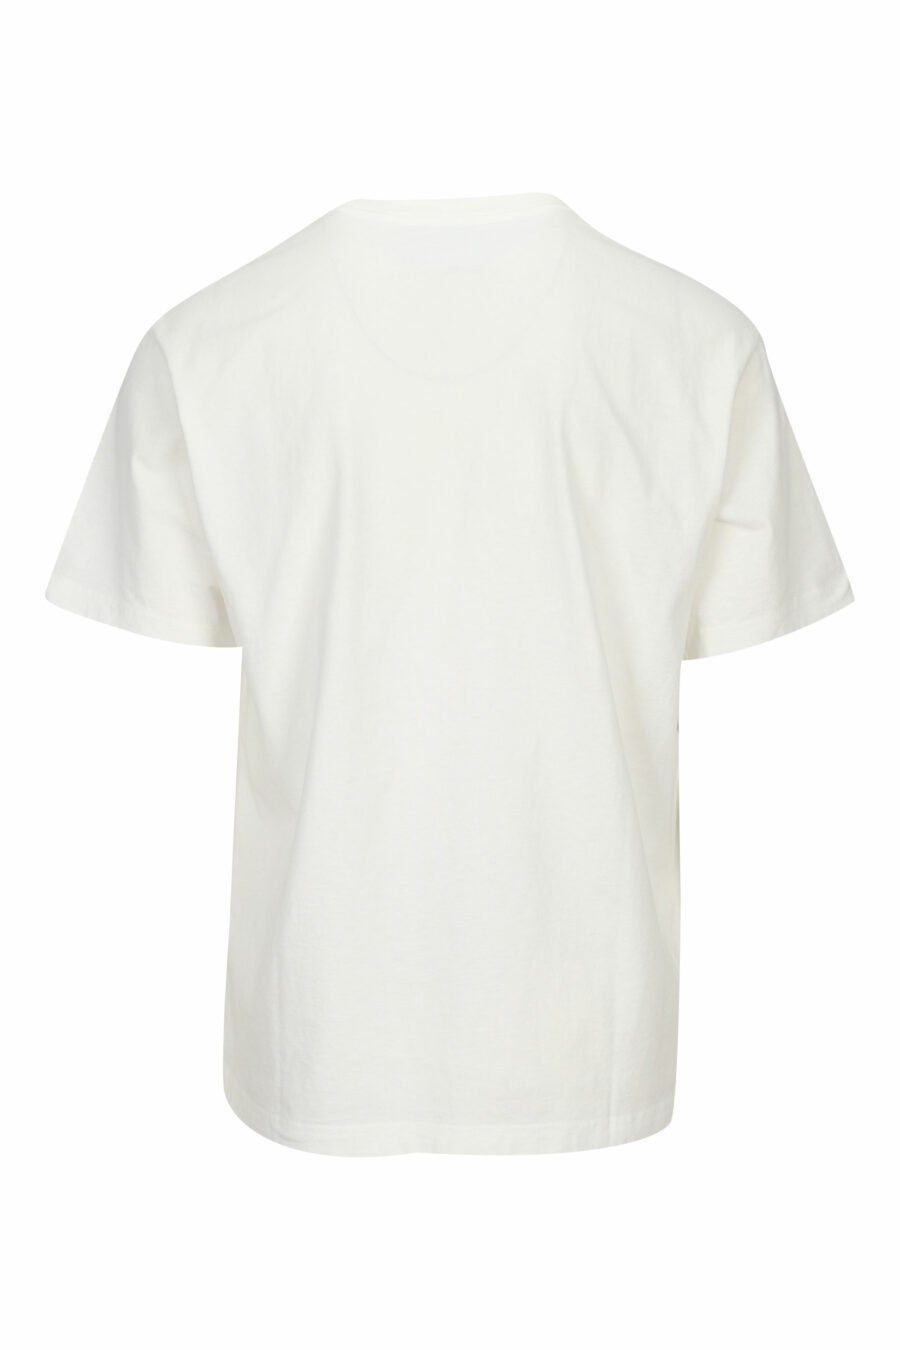 T-shirt branca com maxilogo diagonal "kenzo orange" - 3612230627000 1